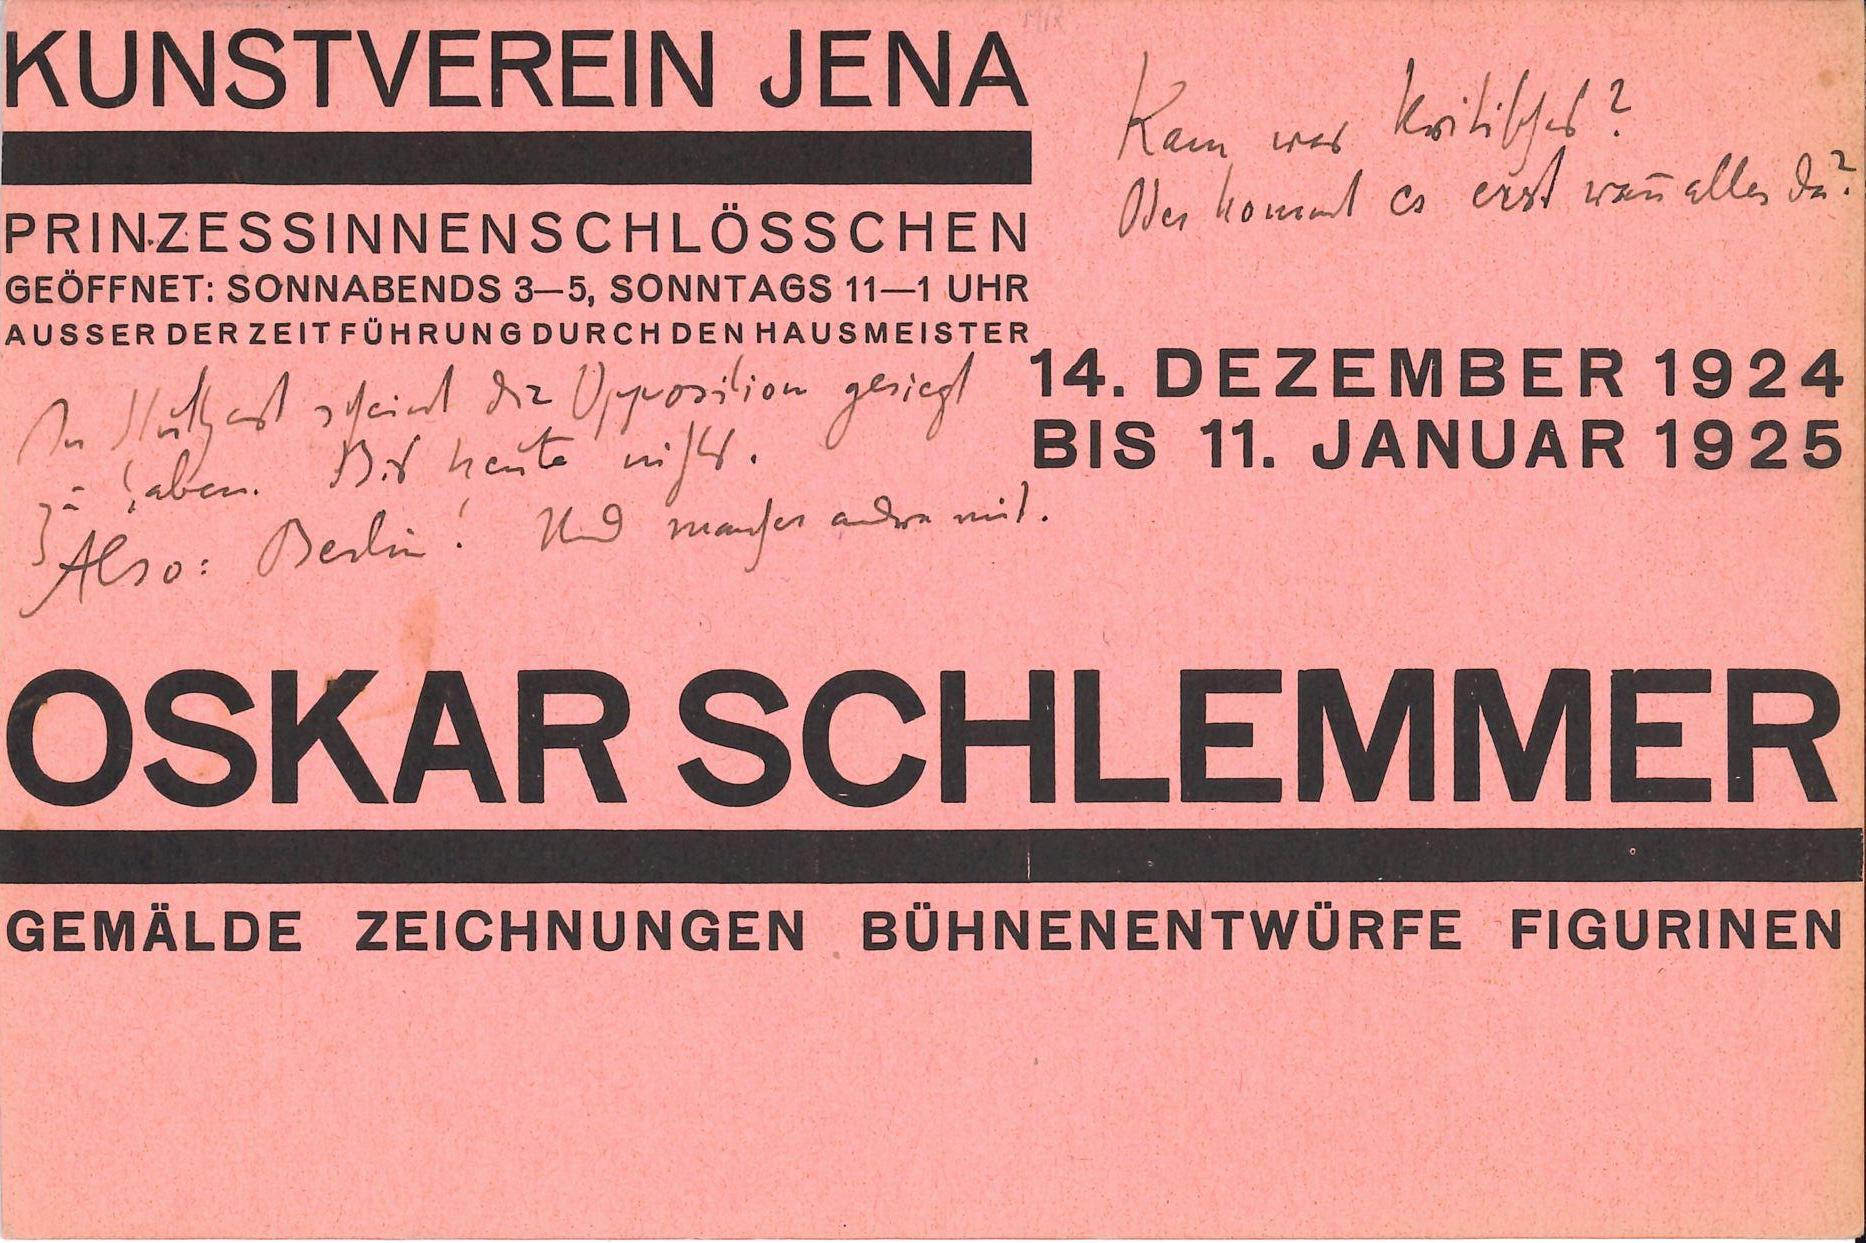 Oskar Schlemmer, Kunstverein Jena 1924 (Invitation) Archiv der Avantgarden, Staatliche Kunstsammlungen Dresden